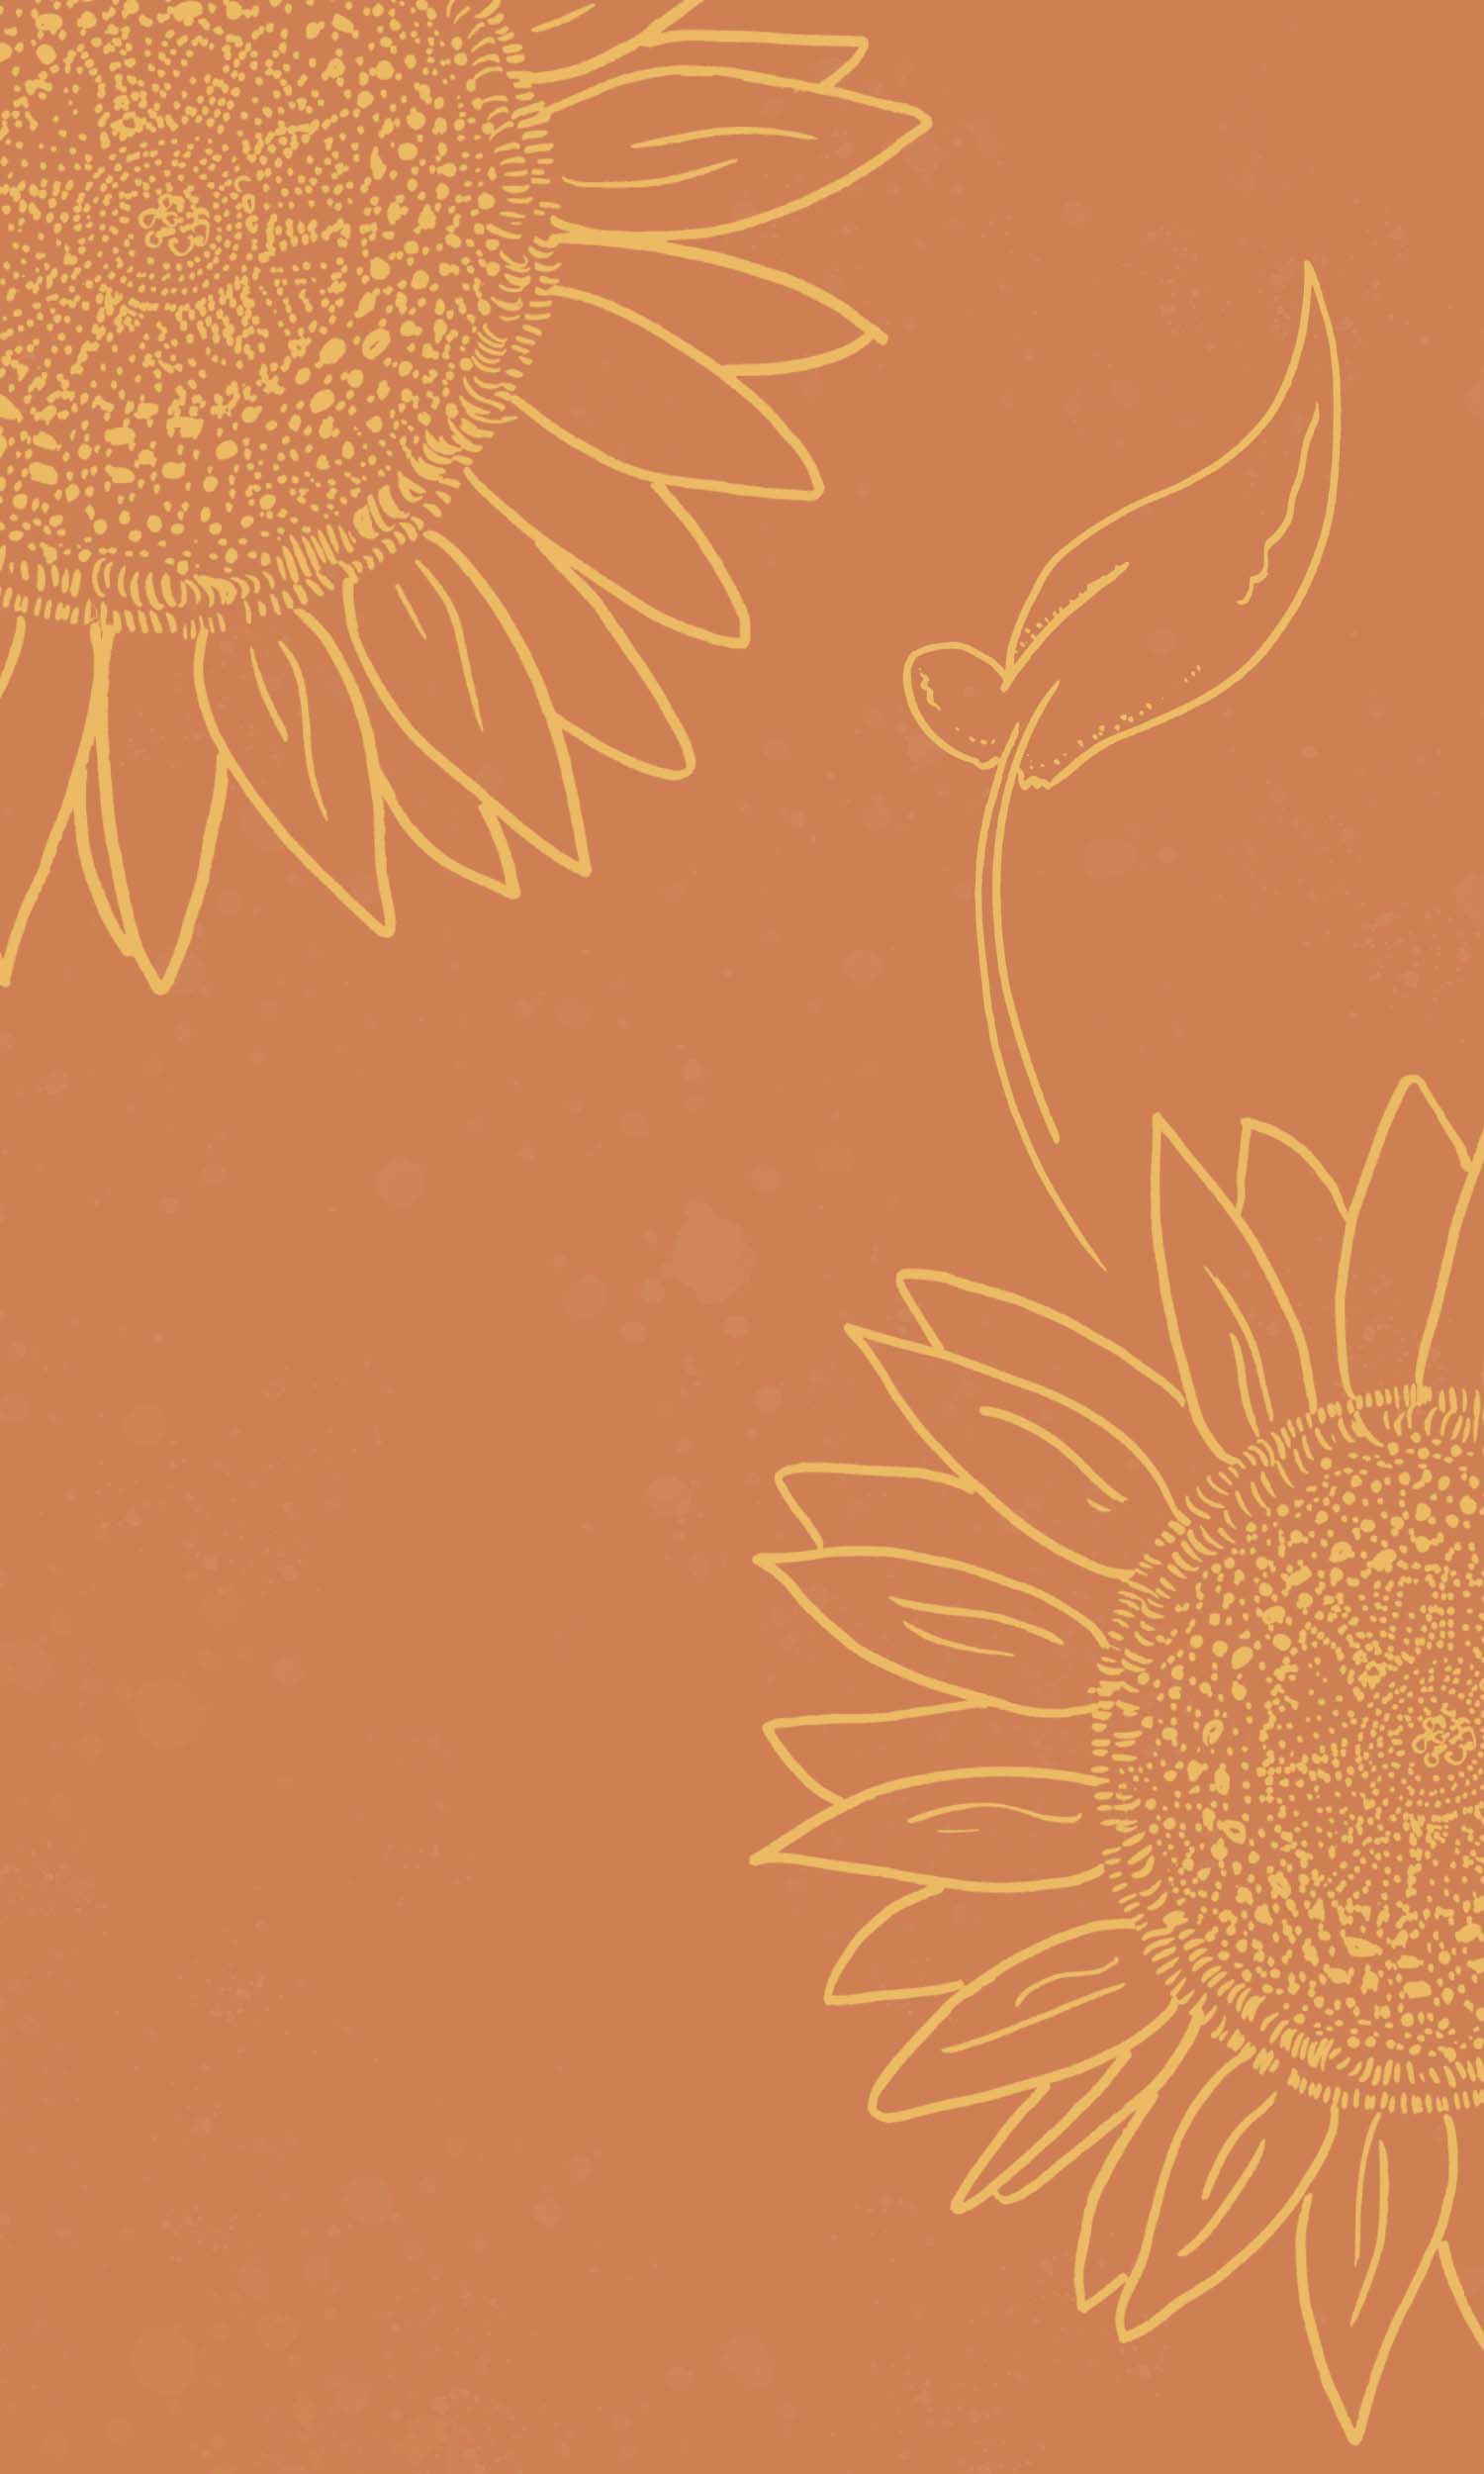 A sunflower design on an orange background - Sunflower, fall iPhone